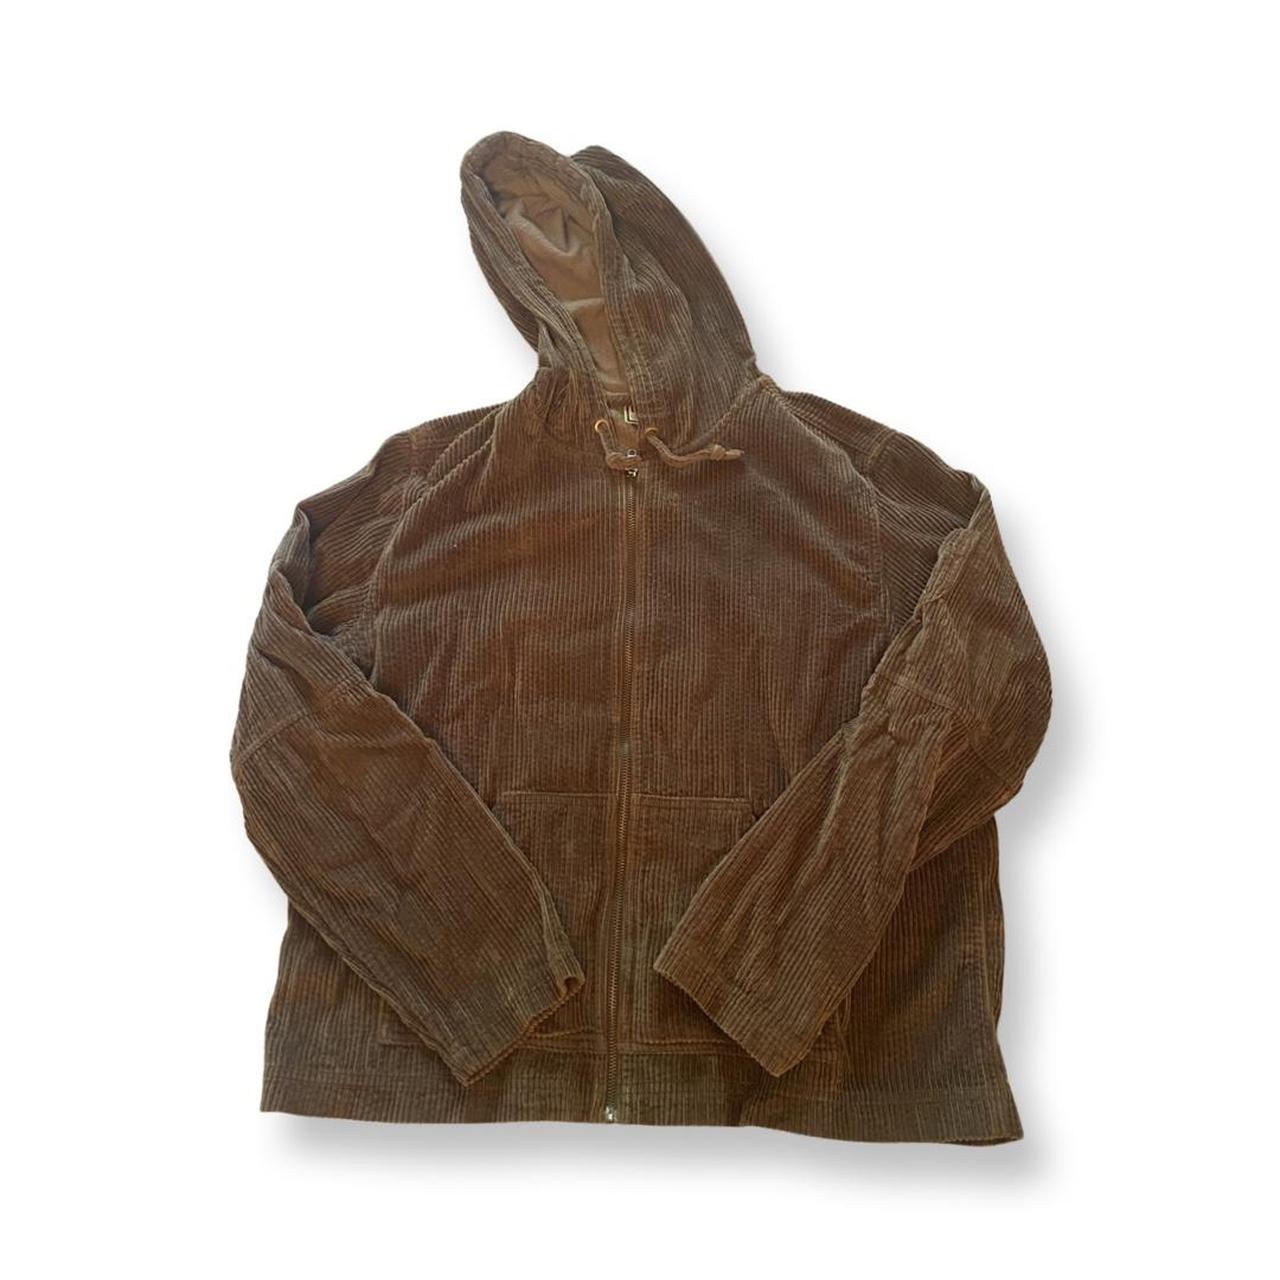 Product Image 1 - Khaki corduroy jacket with hood
Tag